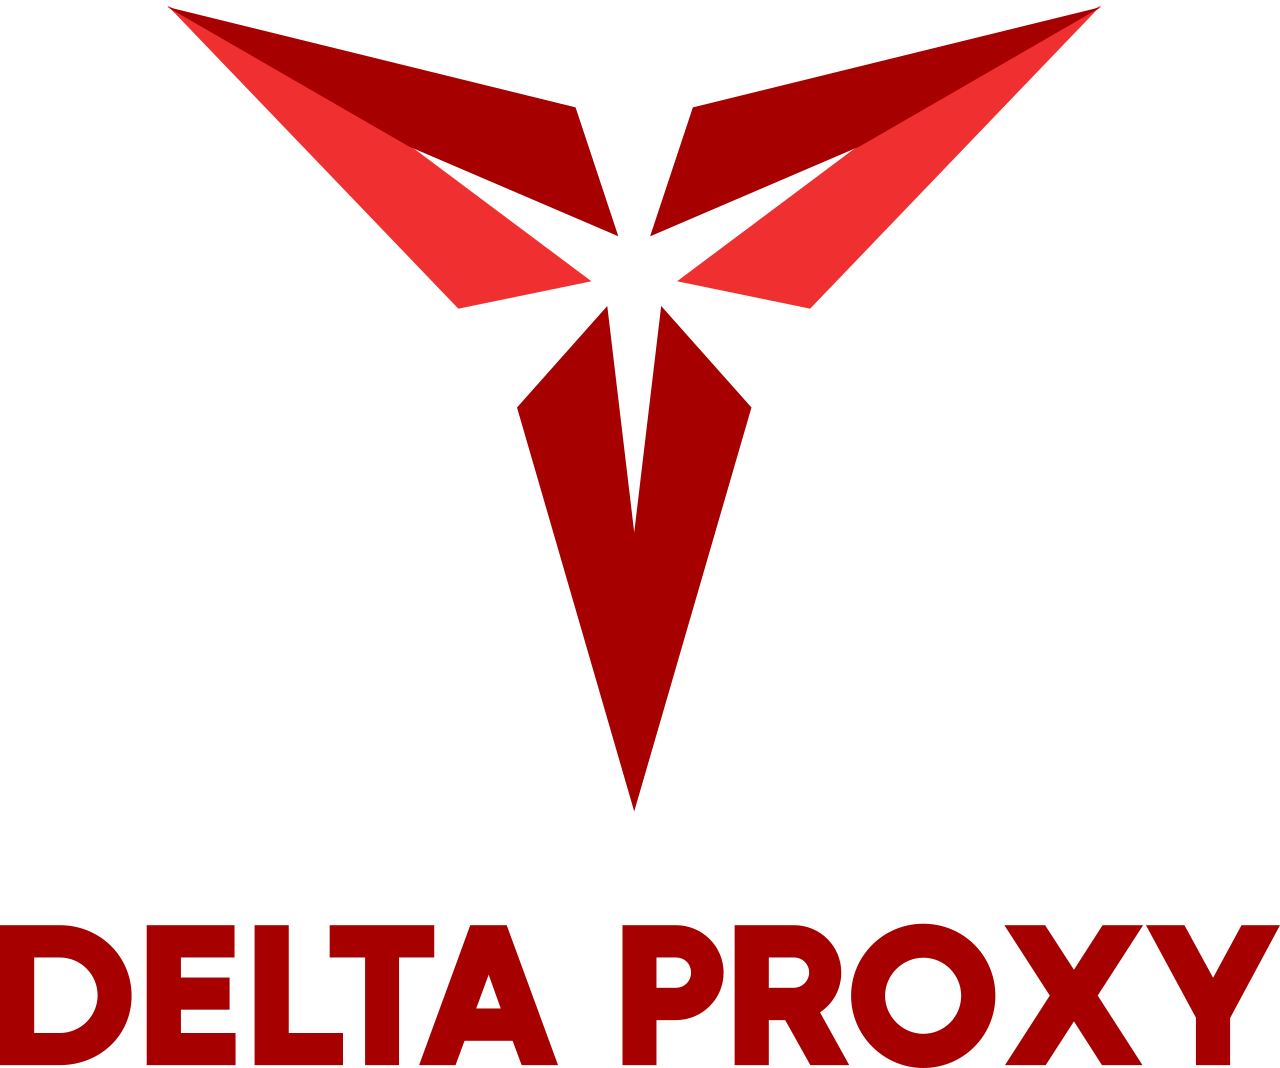 DELTA PROXY's web page